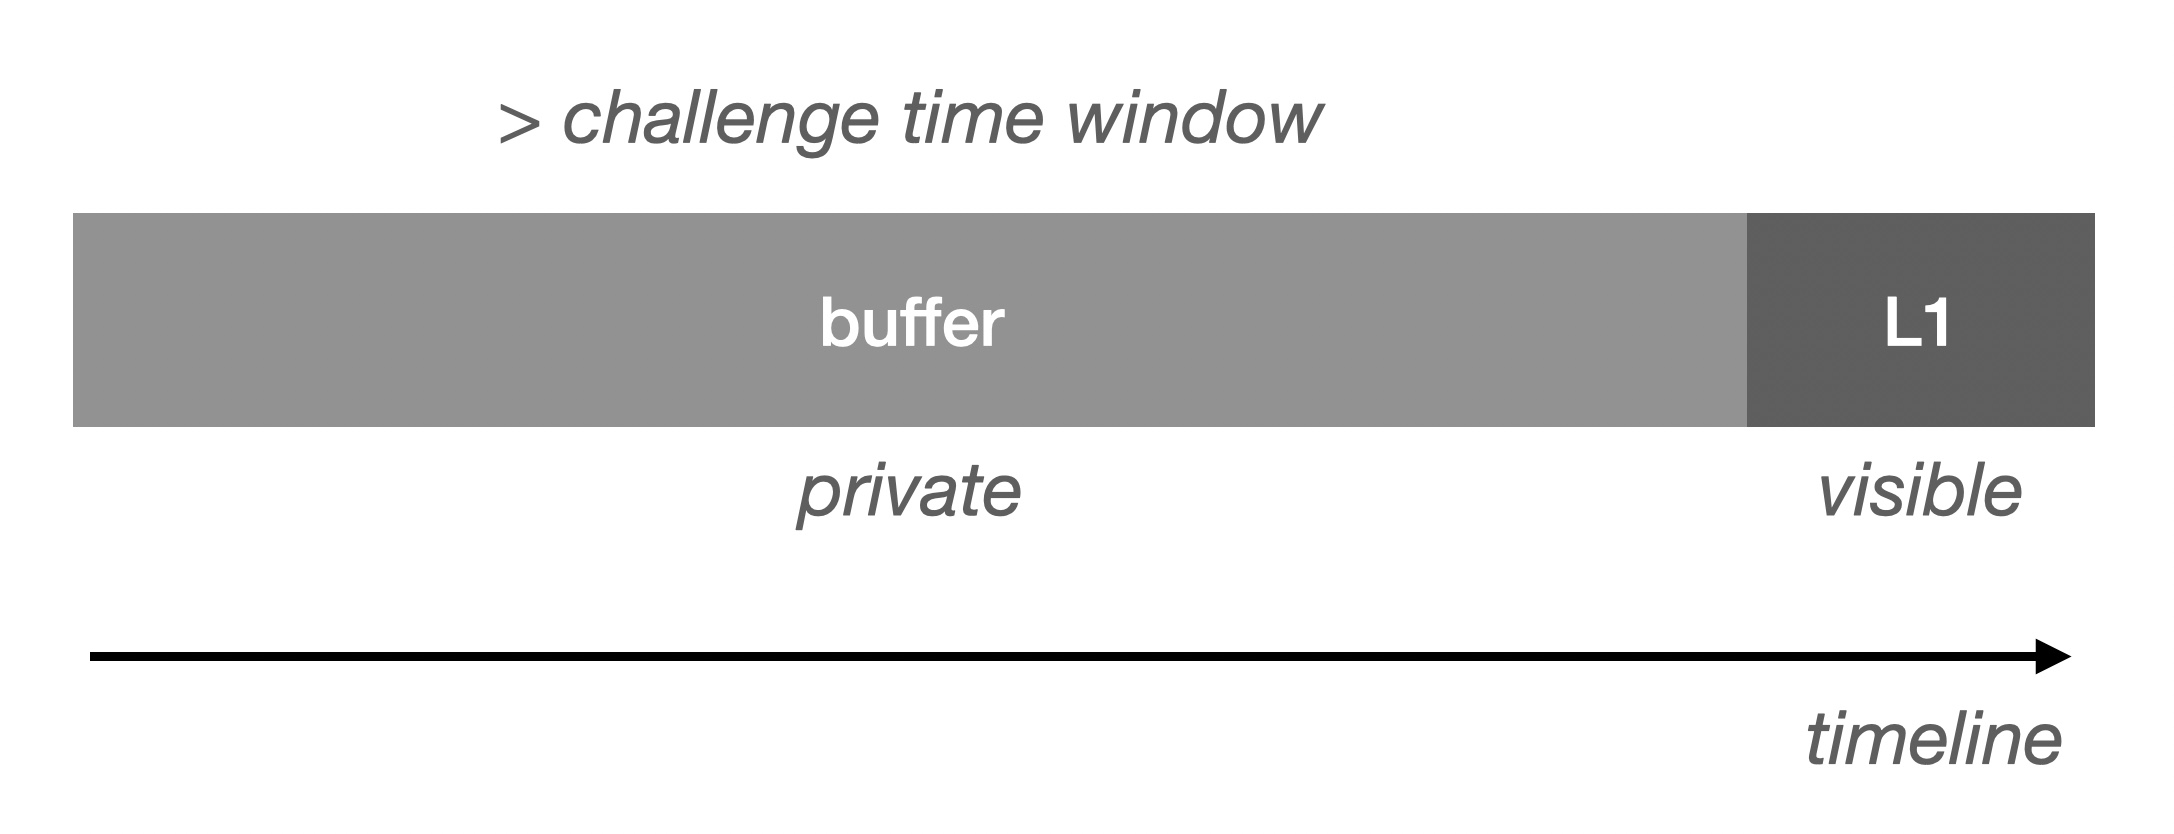 Buffer Challenge Time Window